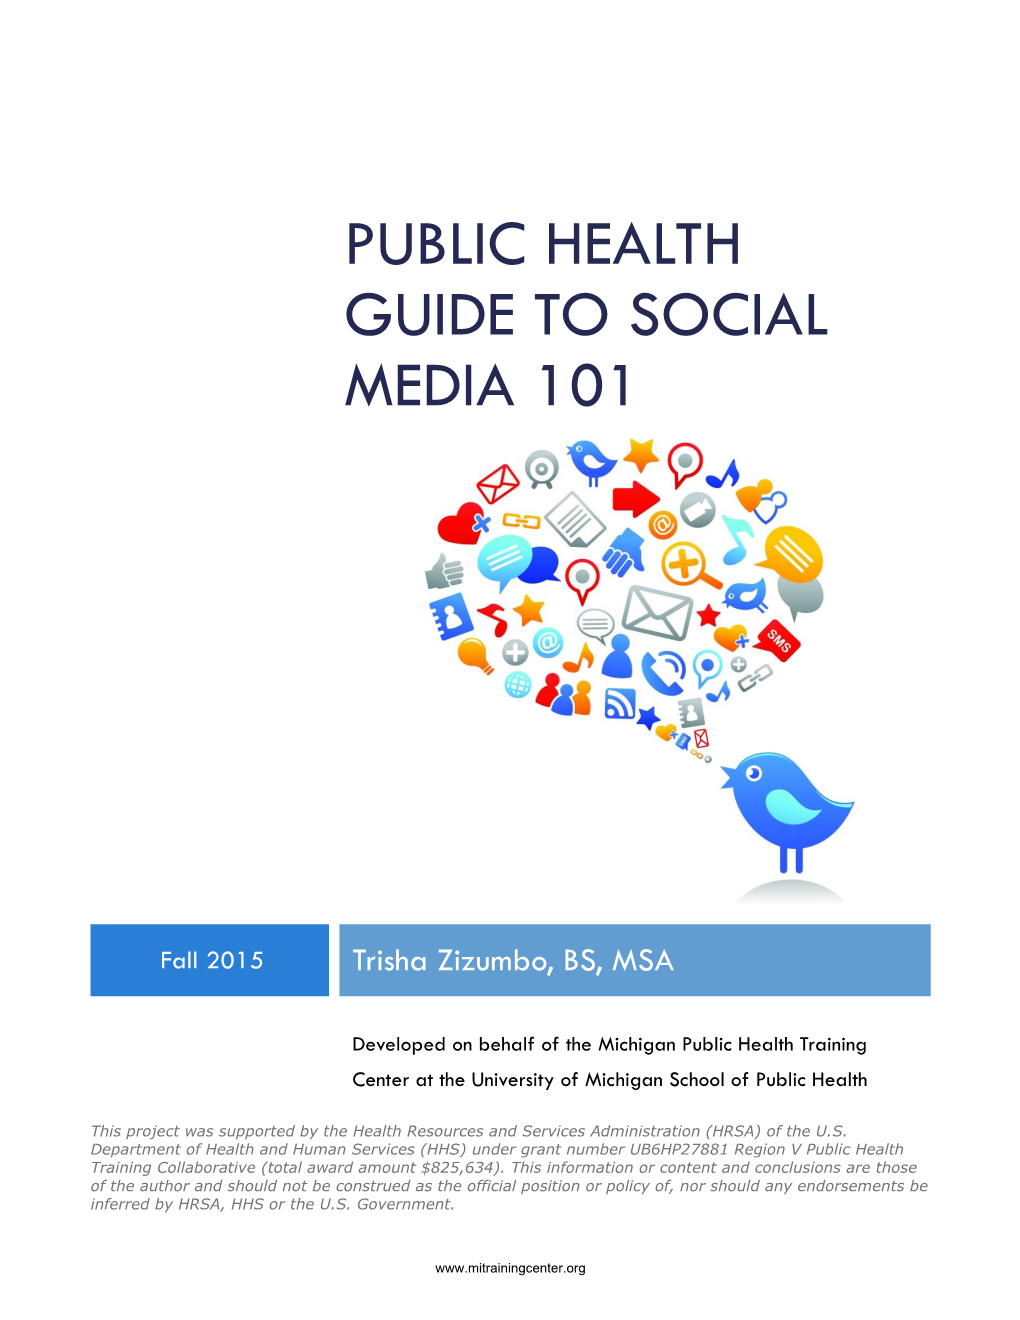 Public Health Guide to Social Media 101